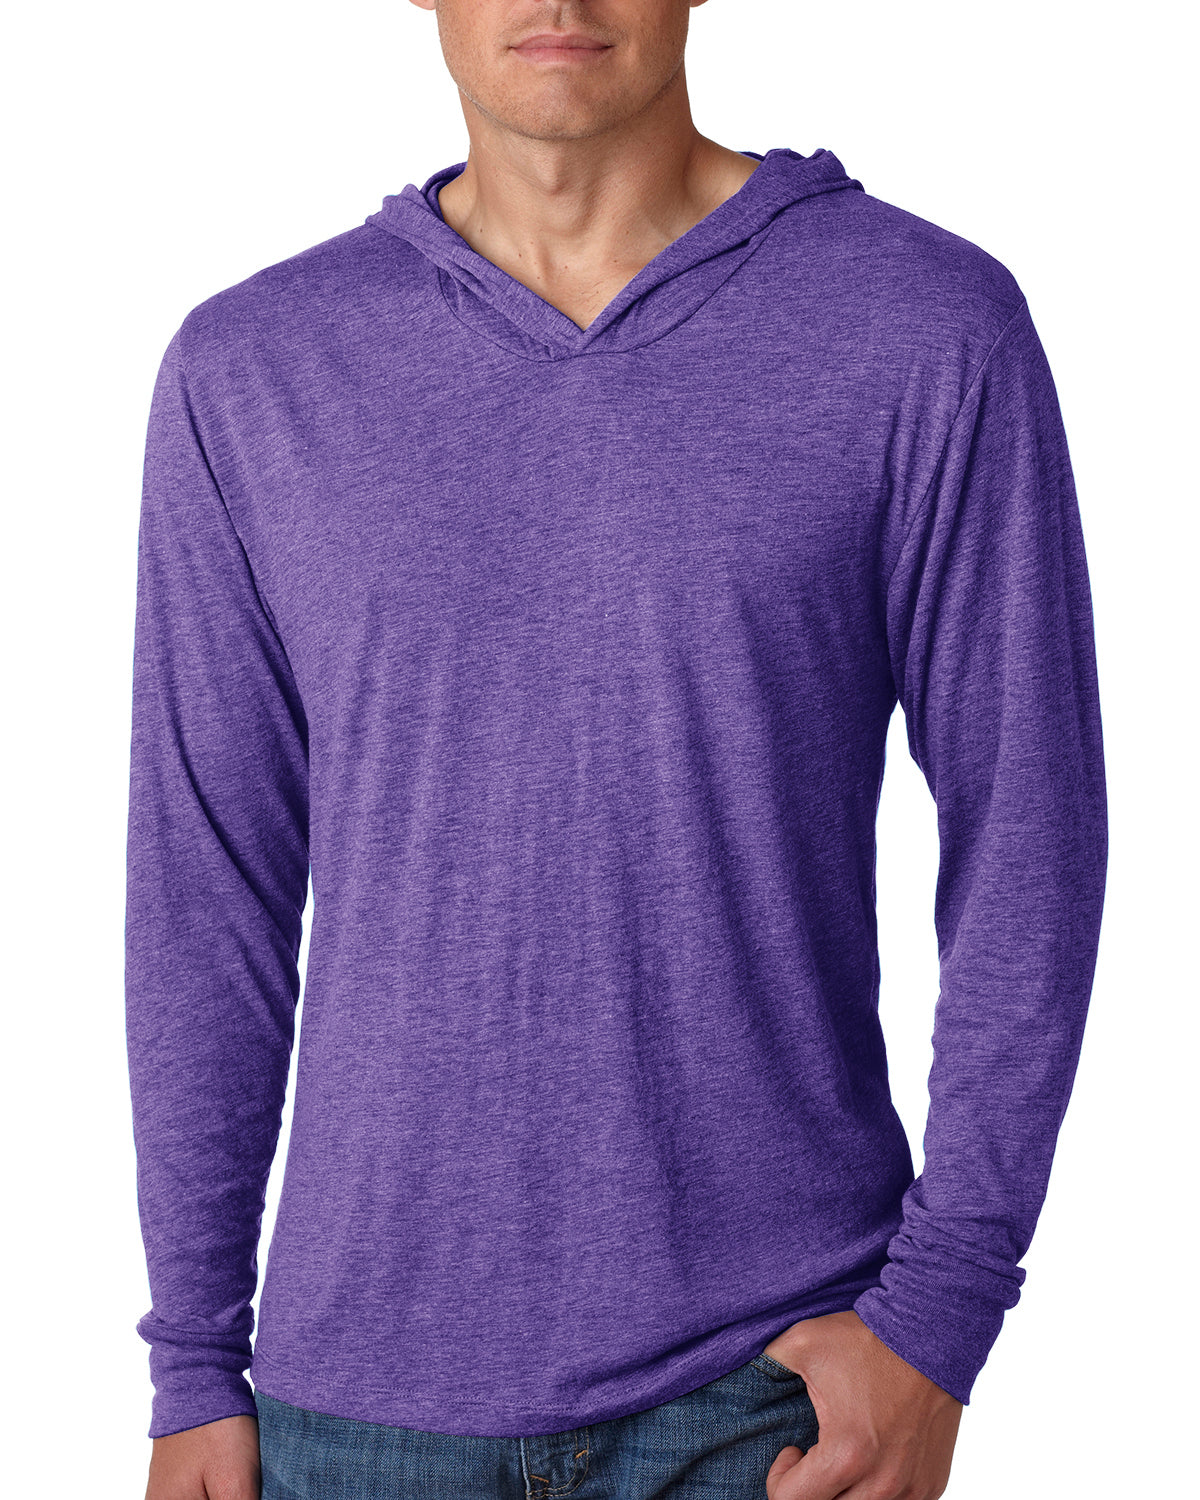 next level long sleeve hoodie purple rush